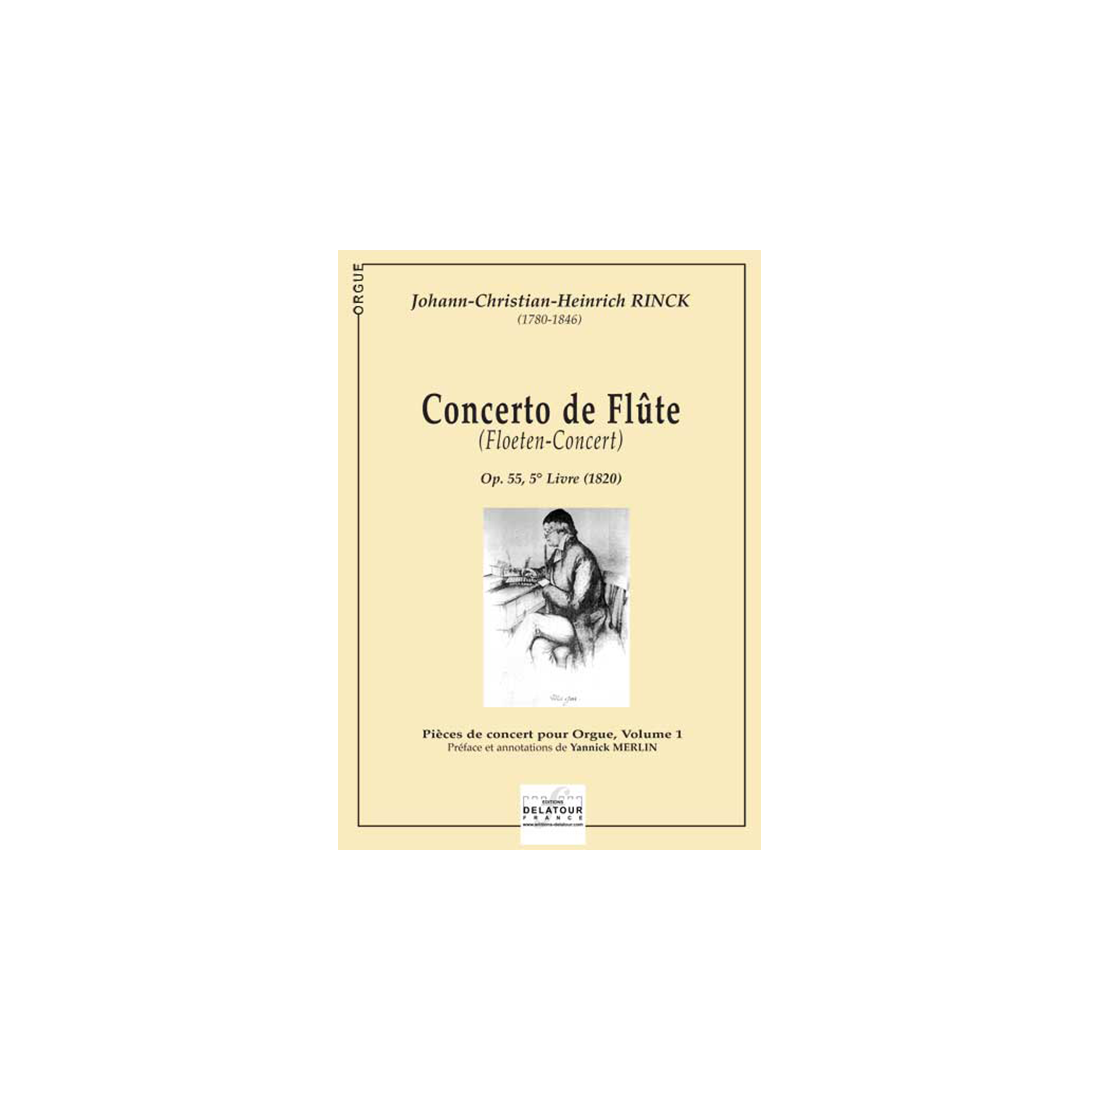 Concerto de Flûte (Floeten-Concert) für Orgel